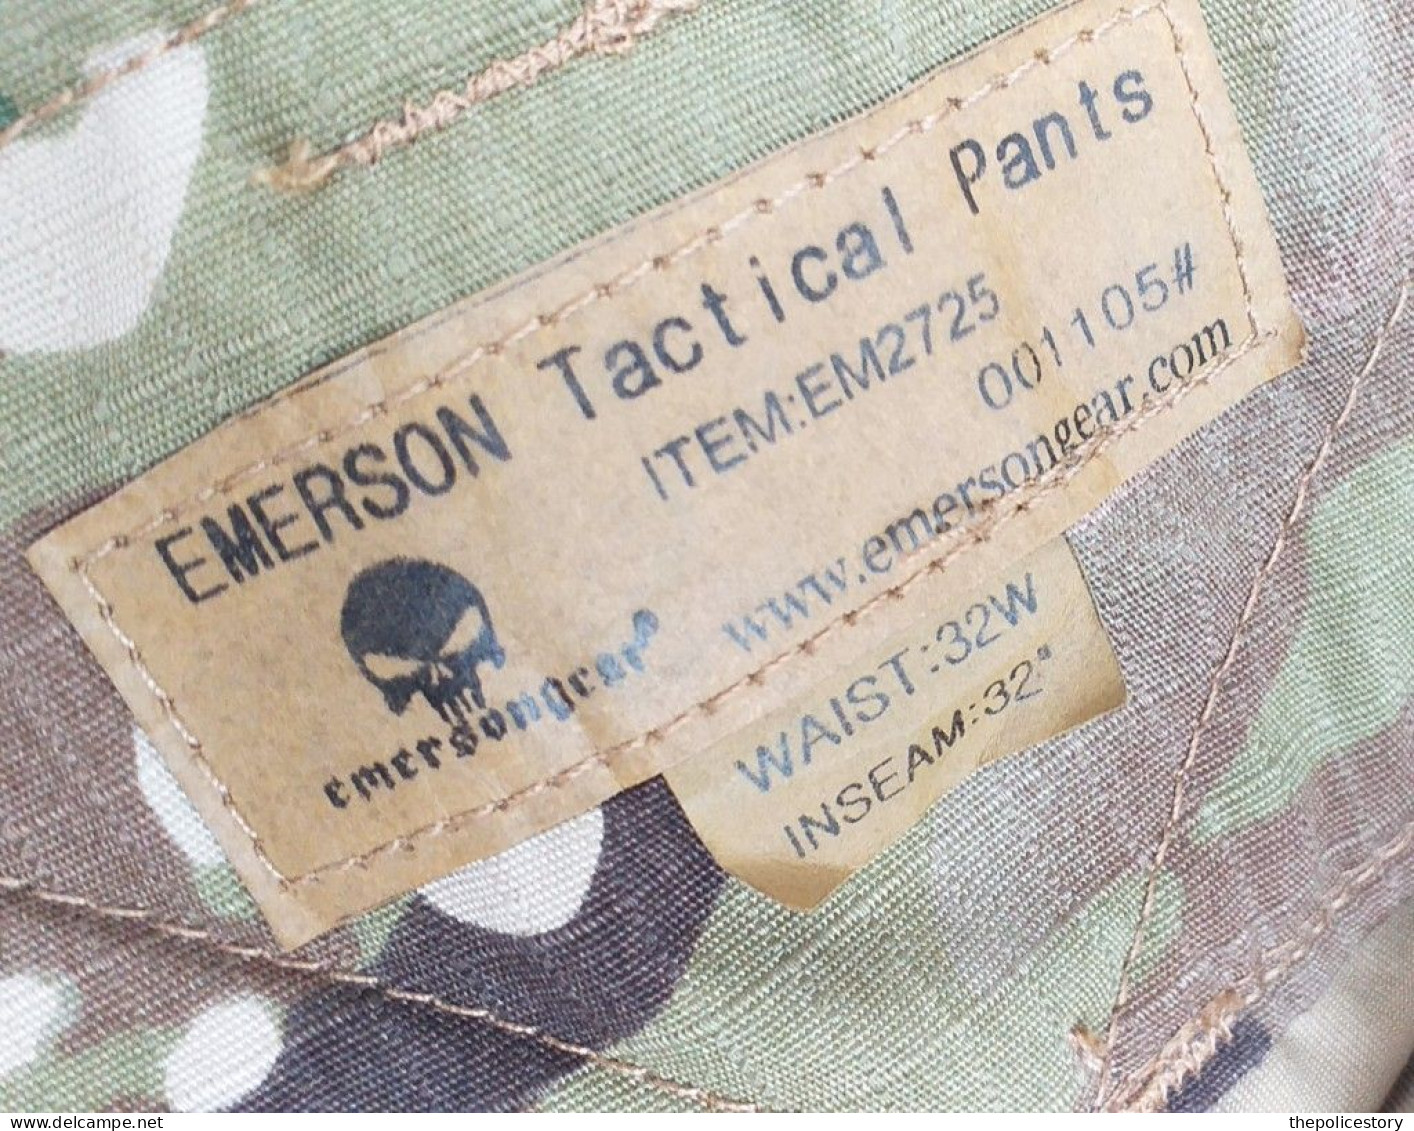 Tactical Combat Shirt + pantaloni imbottiti US Army MTP camo tg. M ottimo stato